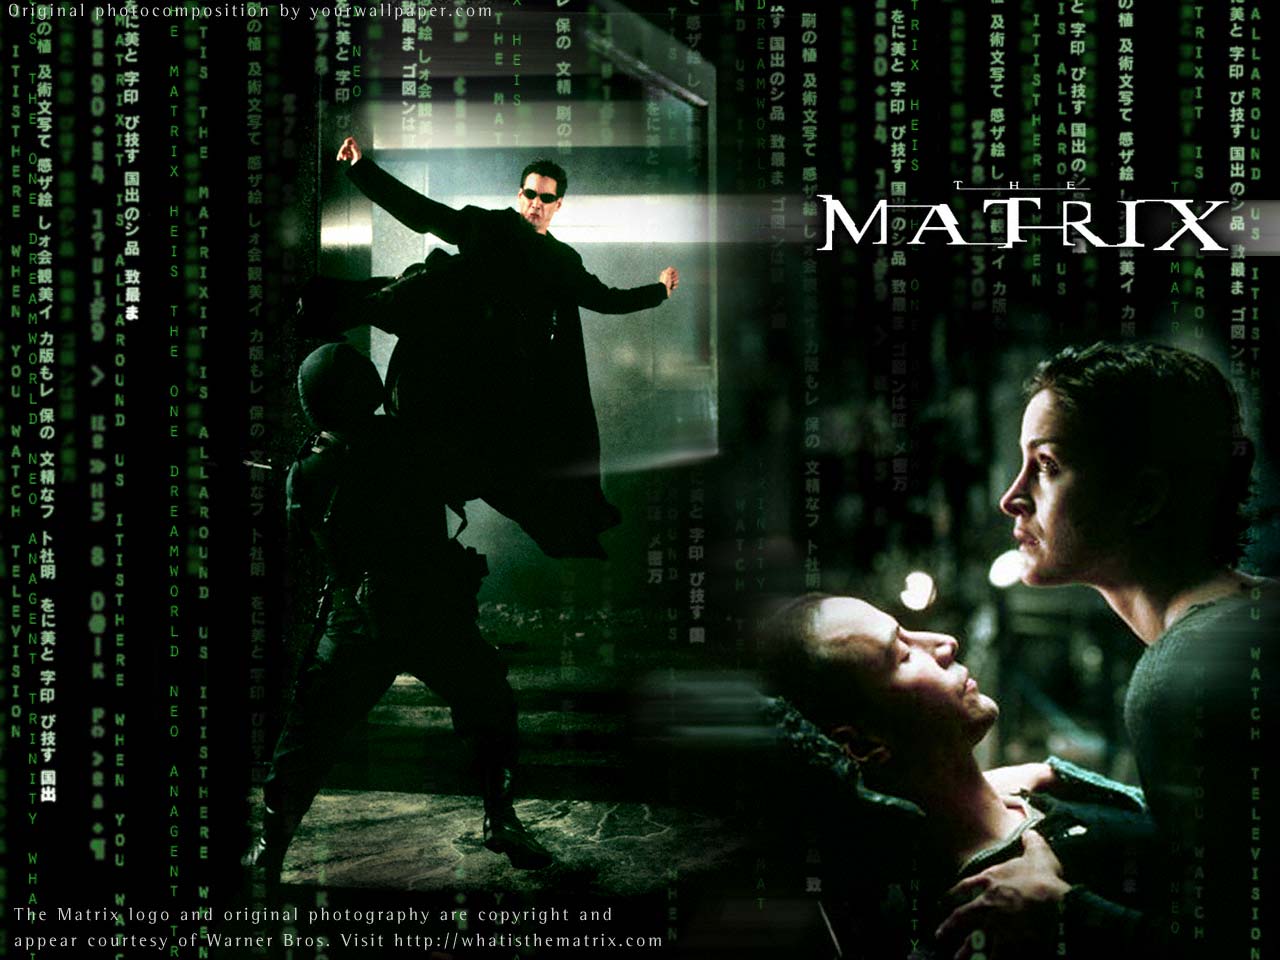 The matrix wallpaper - Neo, Trinity, Morpheus and crew - free